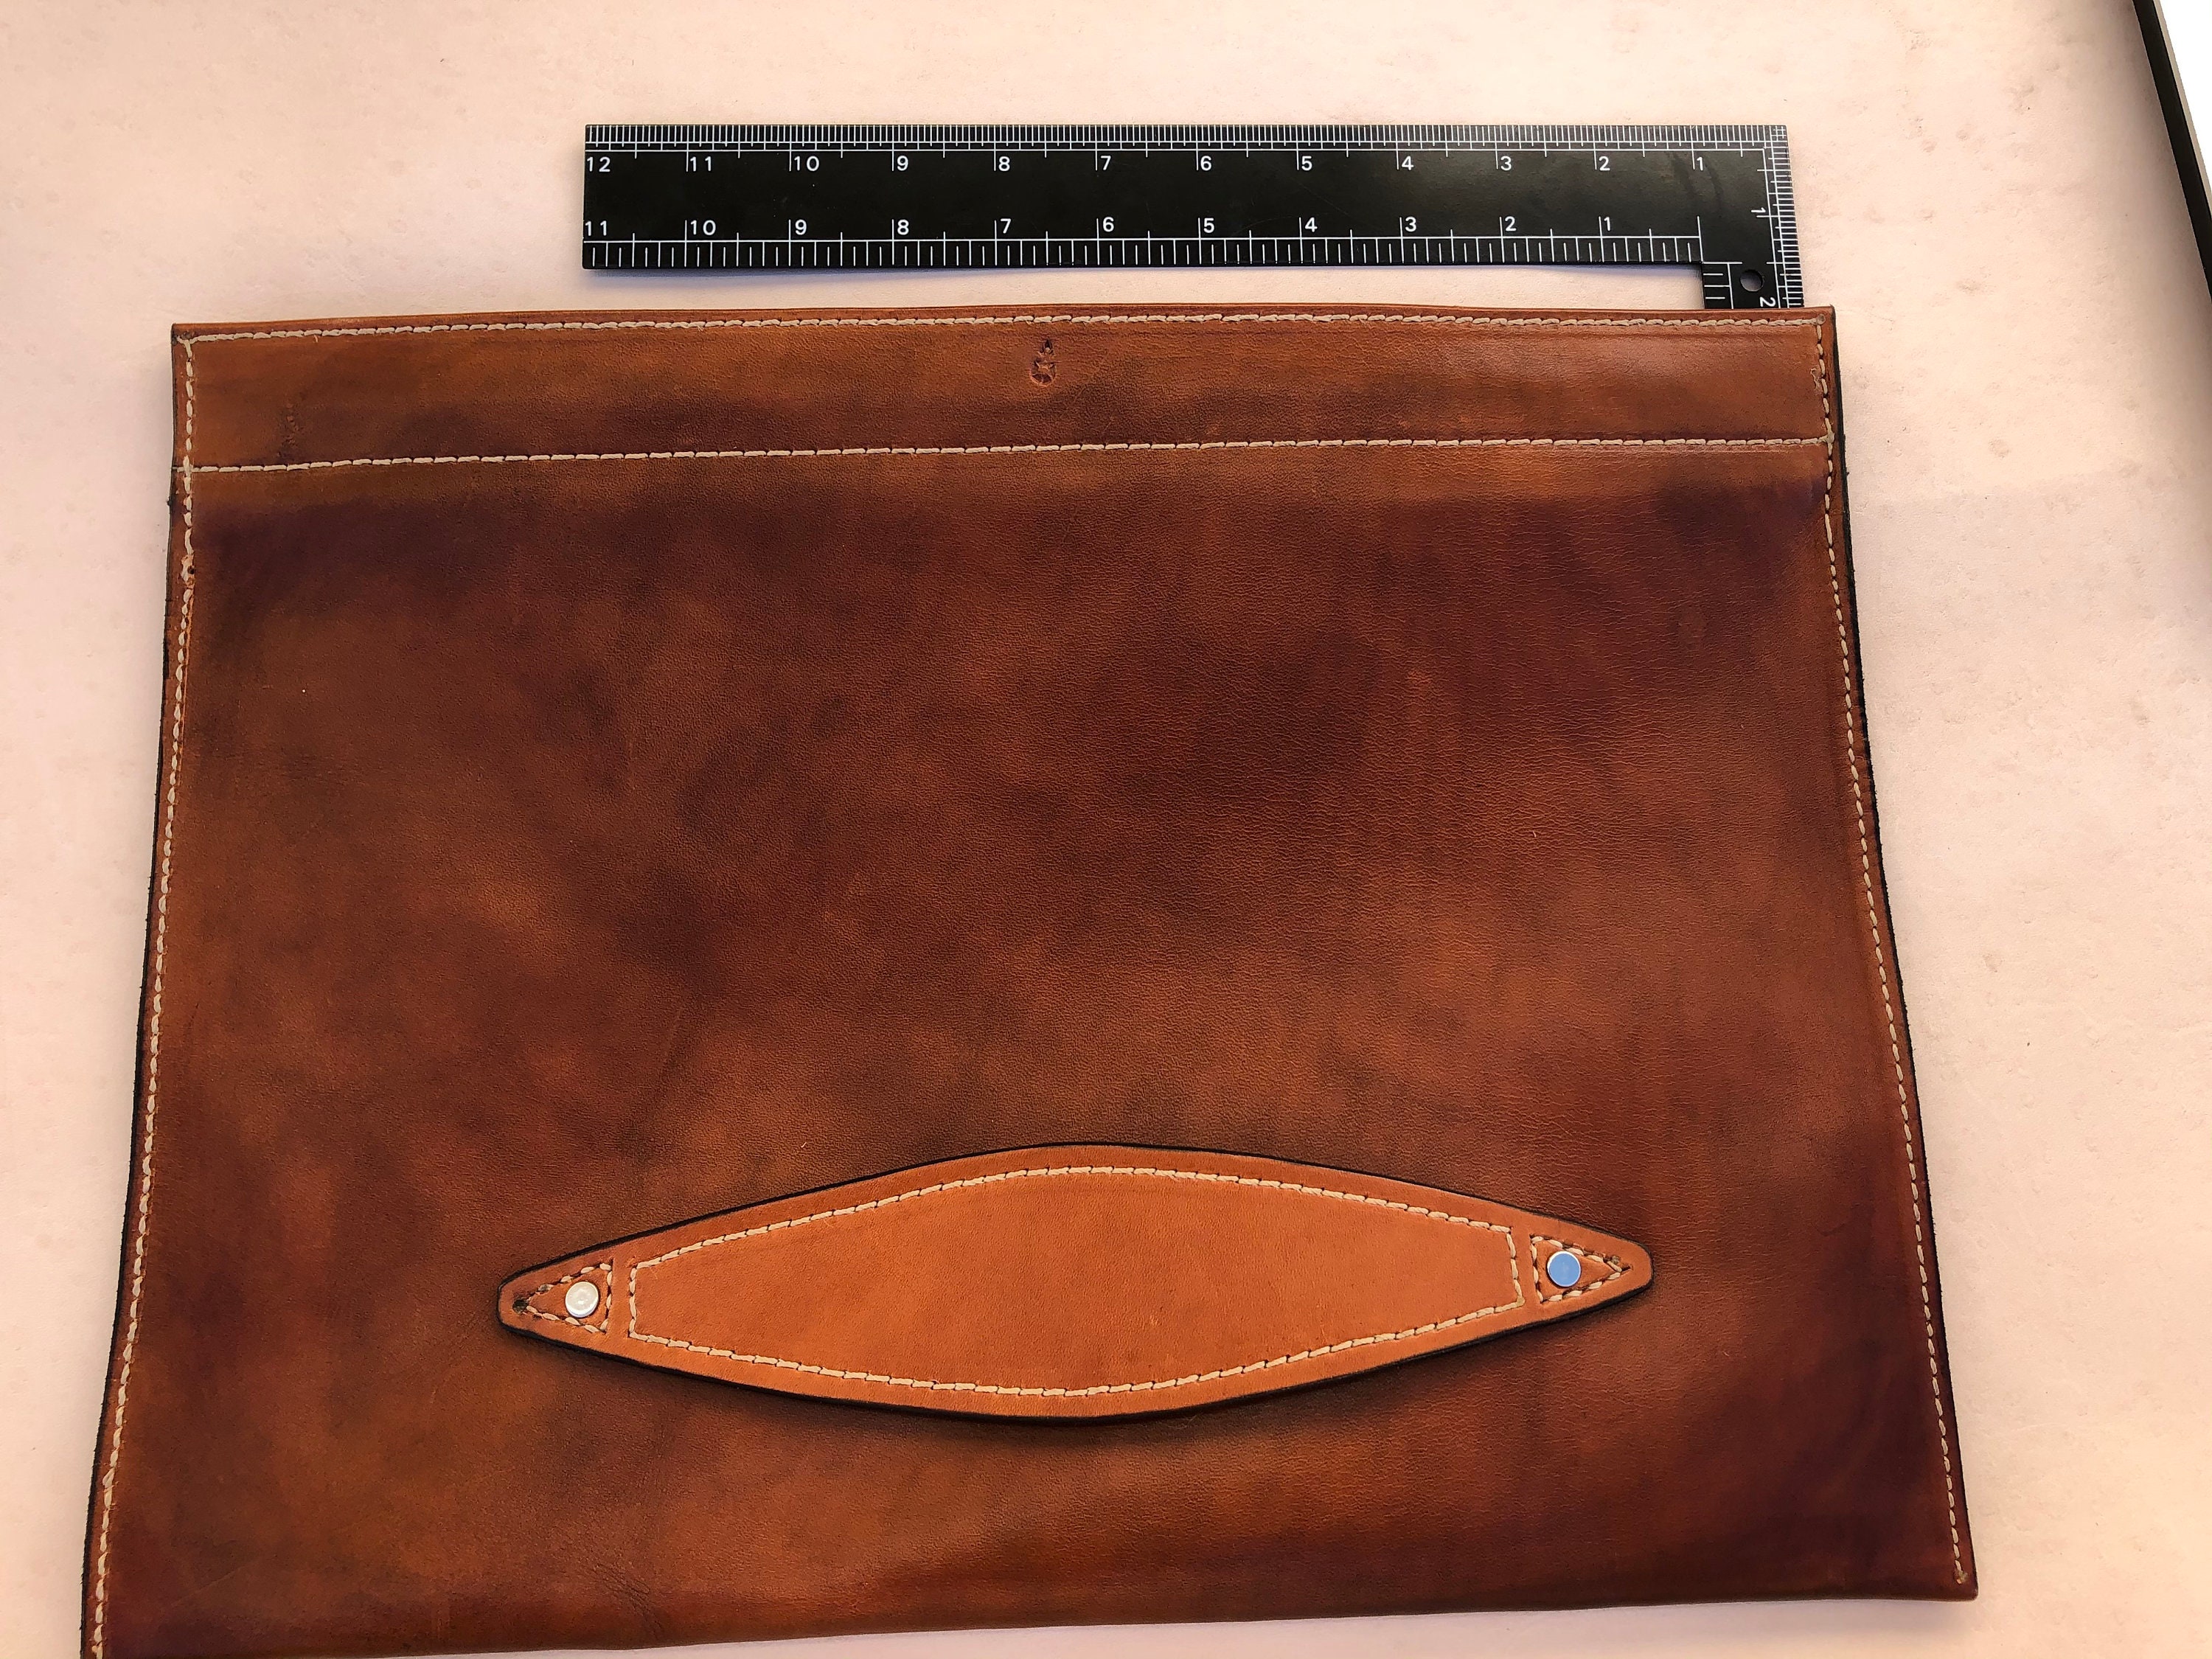 Handmade Wickett and craig leather Macbook pro satchel/sleeve | Etsy